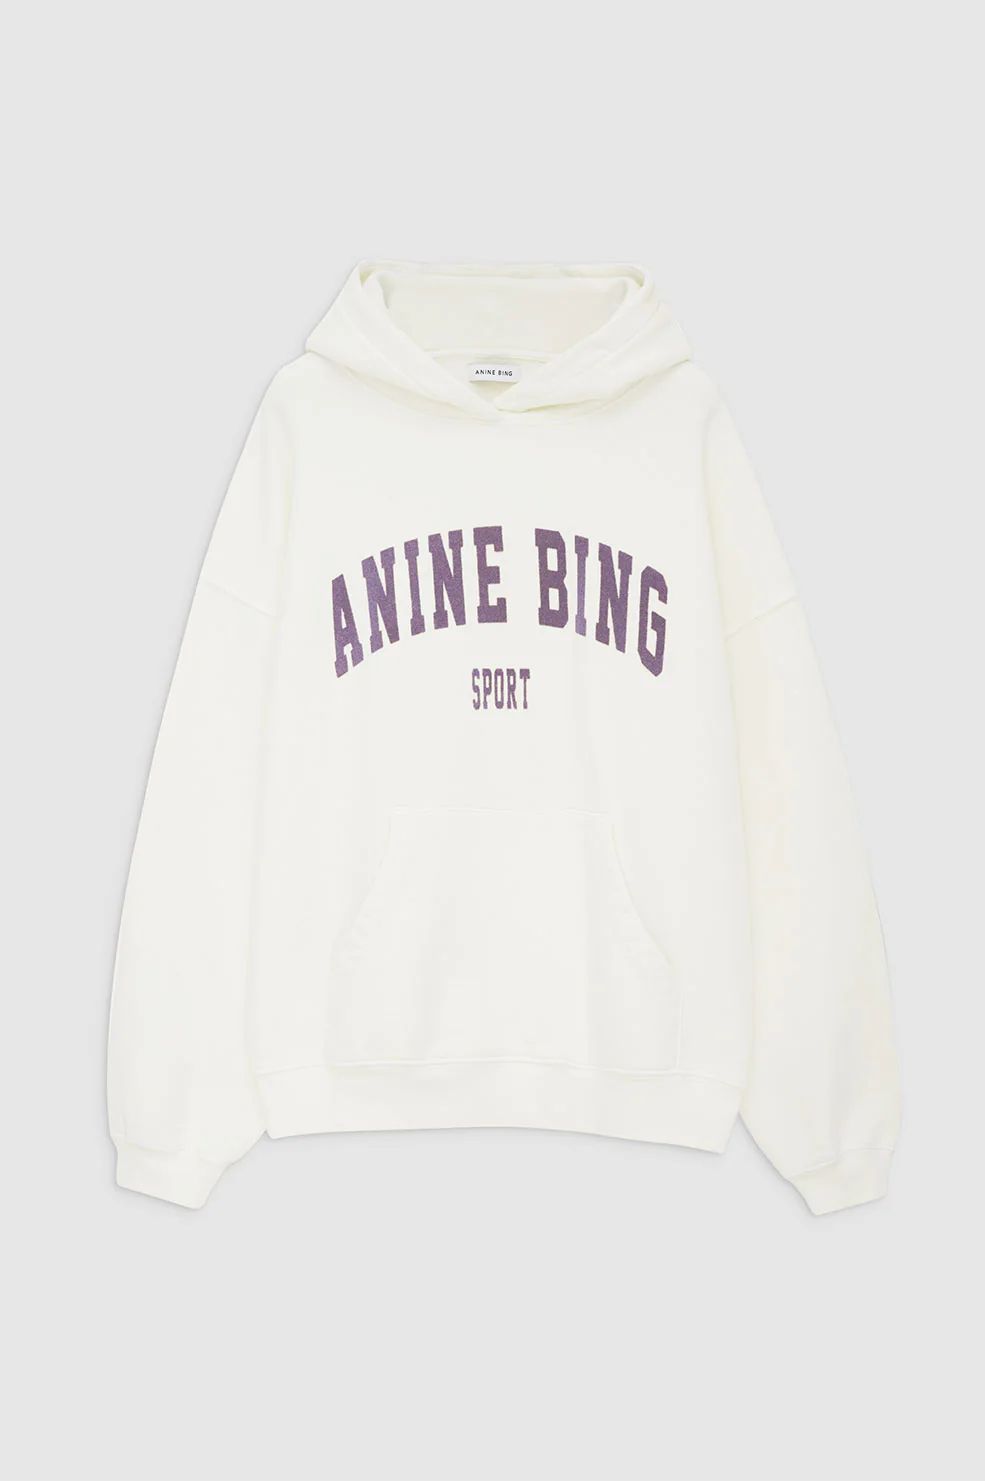 Harvey Sweatshirt | Anine Bing